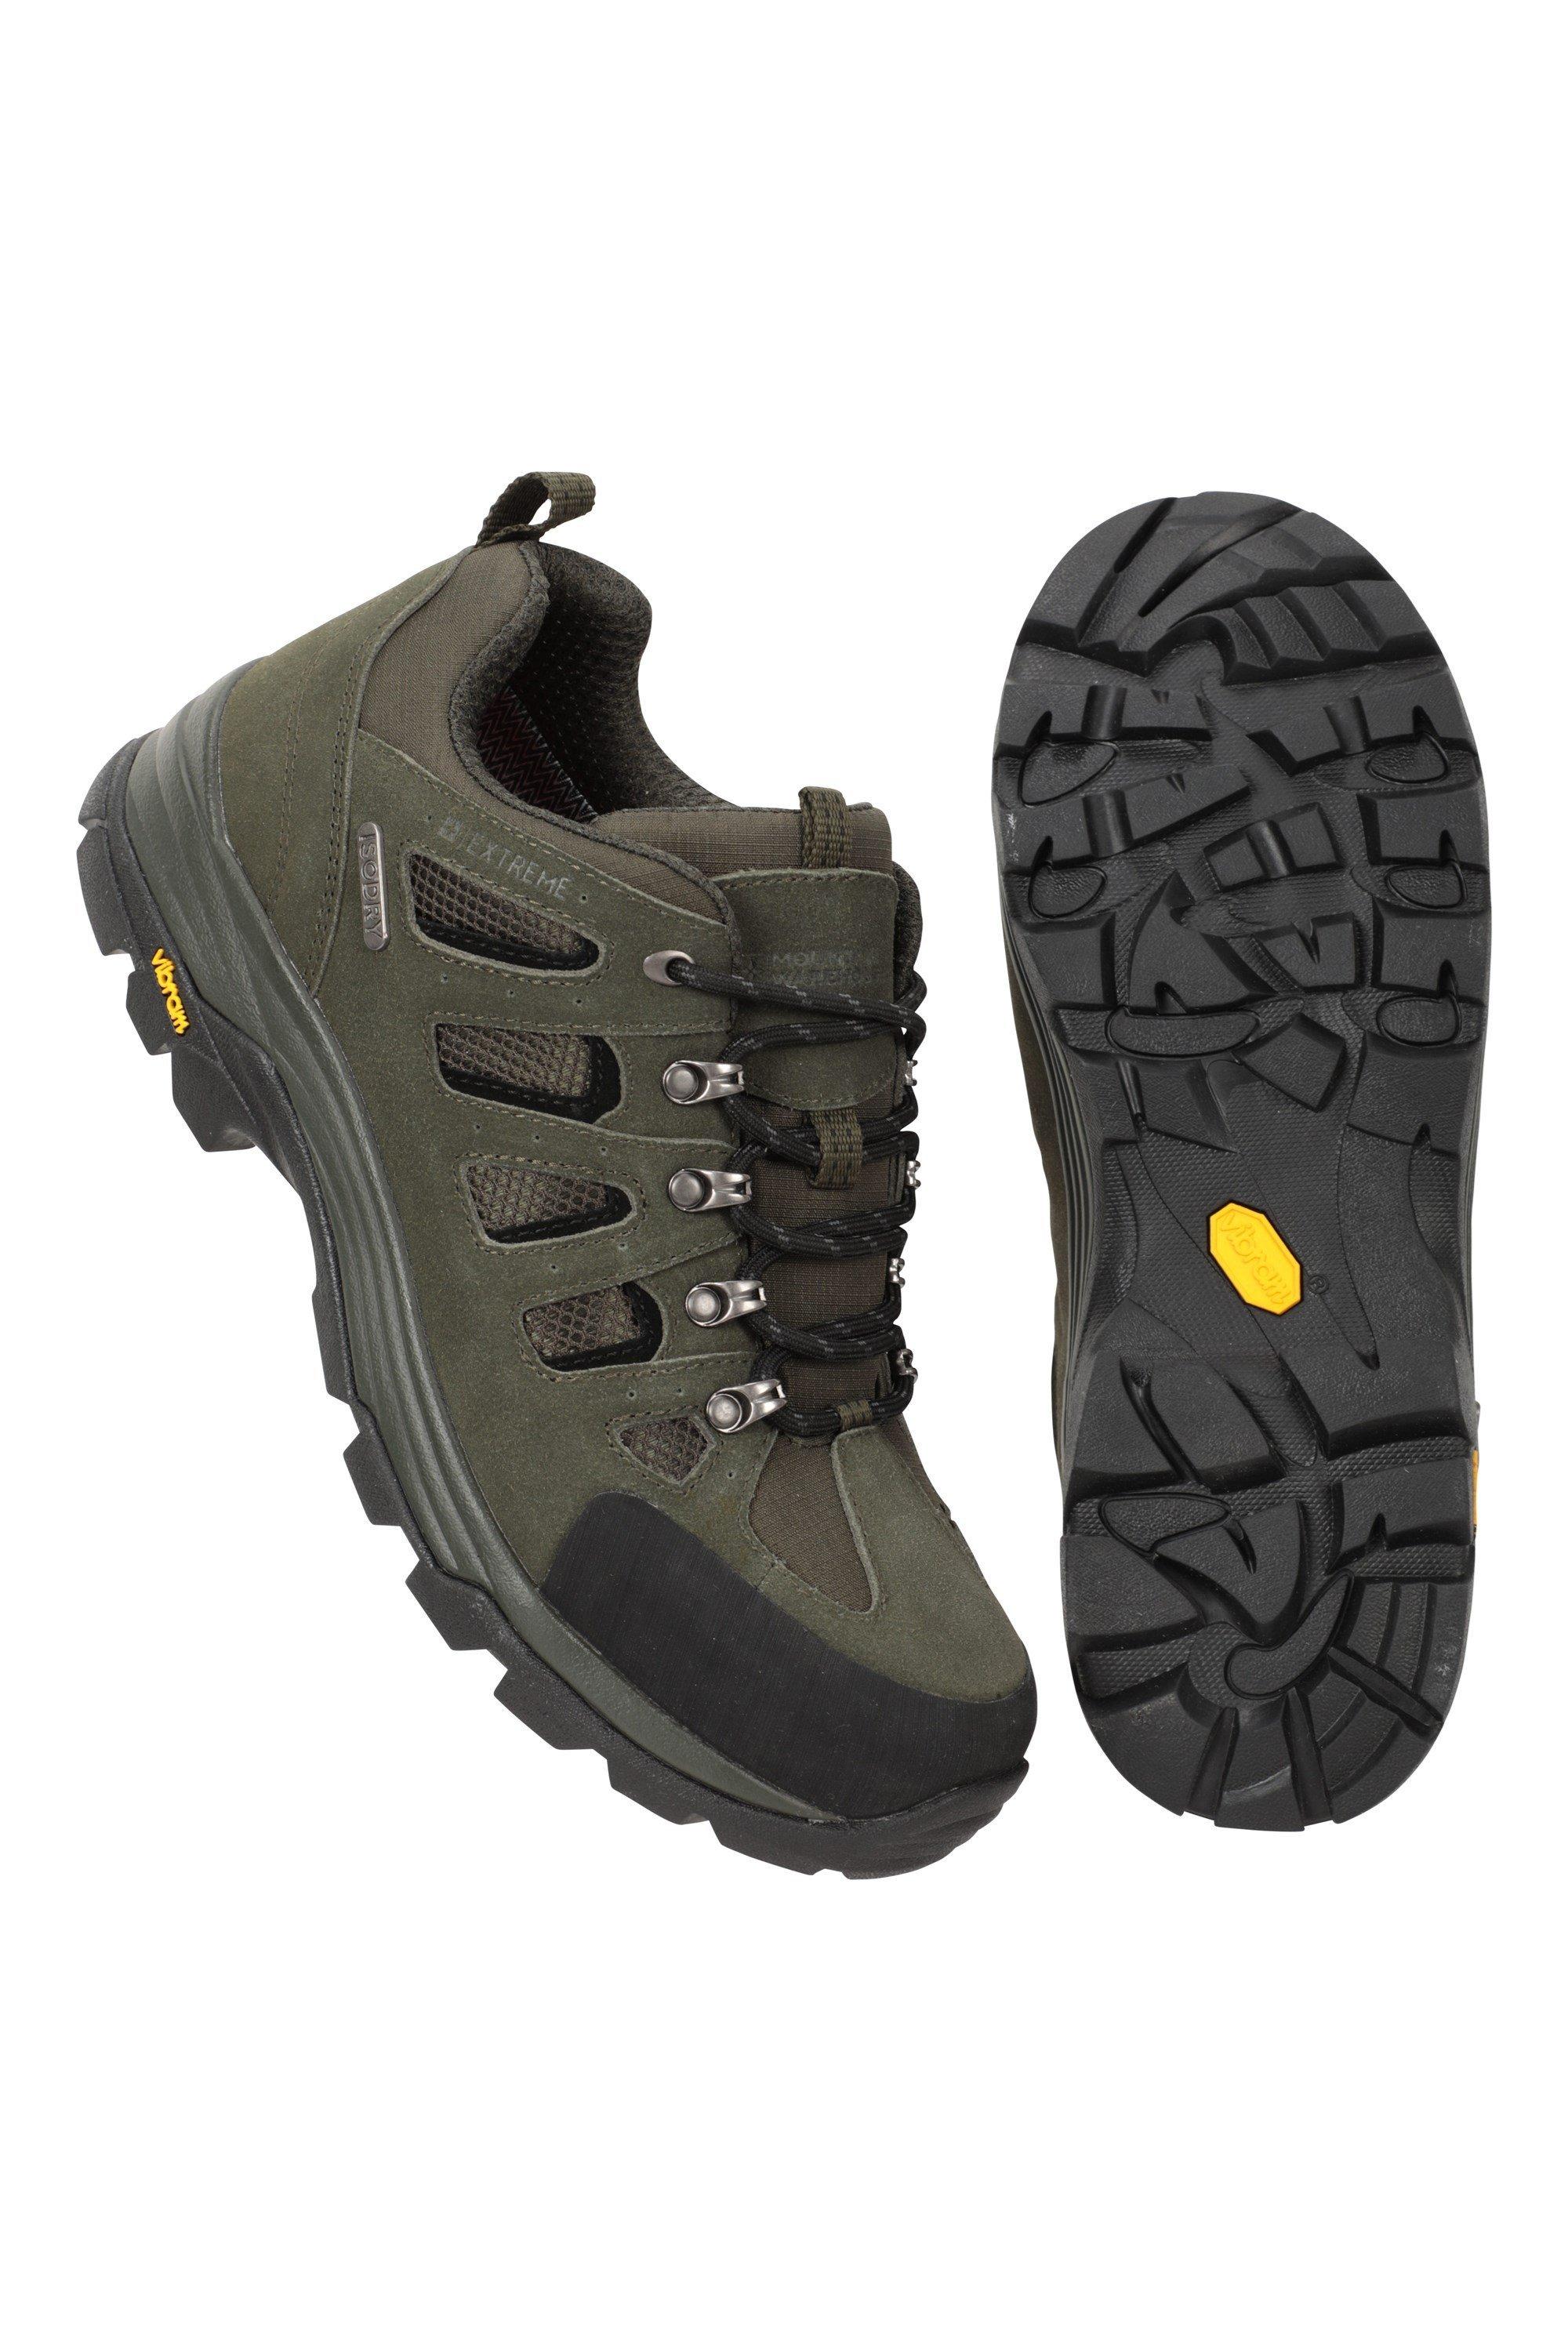 Boots | Vertex Extreme Vibram Shoe Waterproof IsoDry Hiking Shoes ...